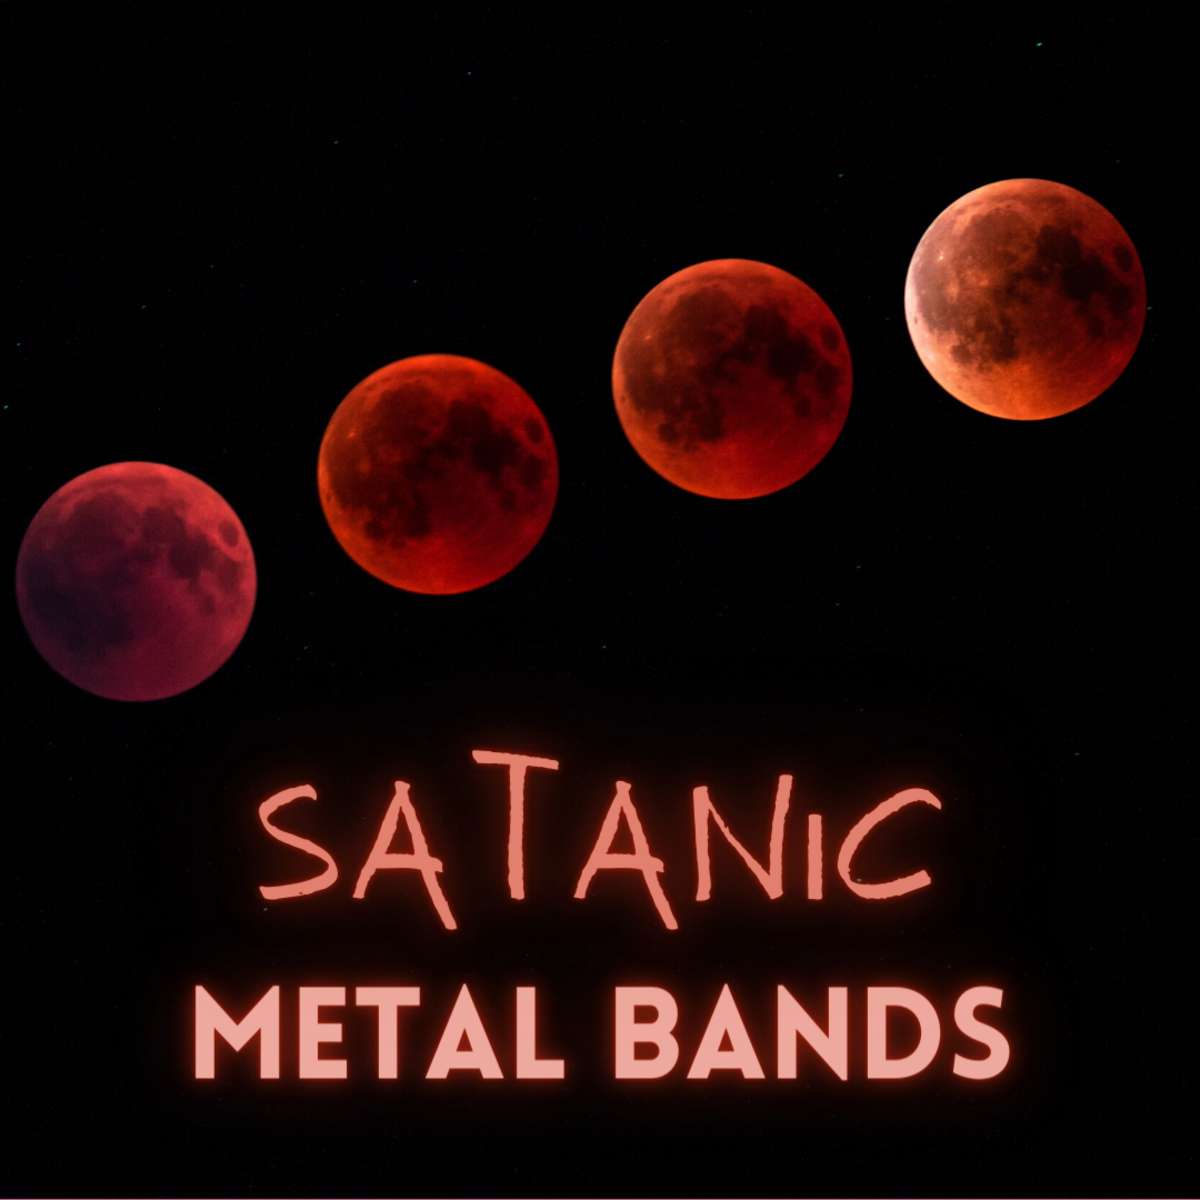 Top 8 Satanic Metal Bands of All Time